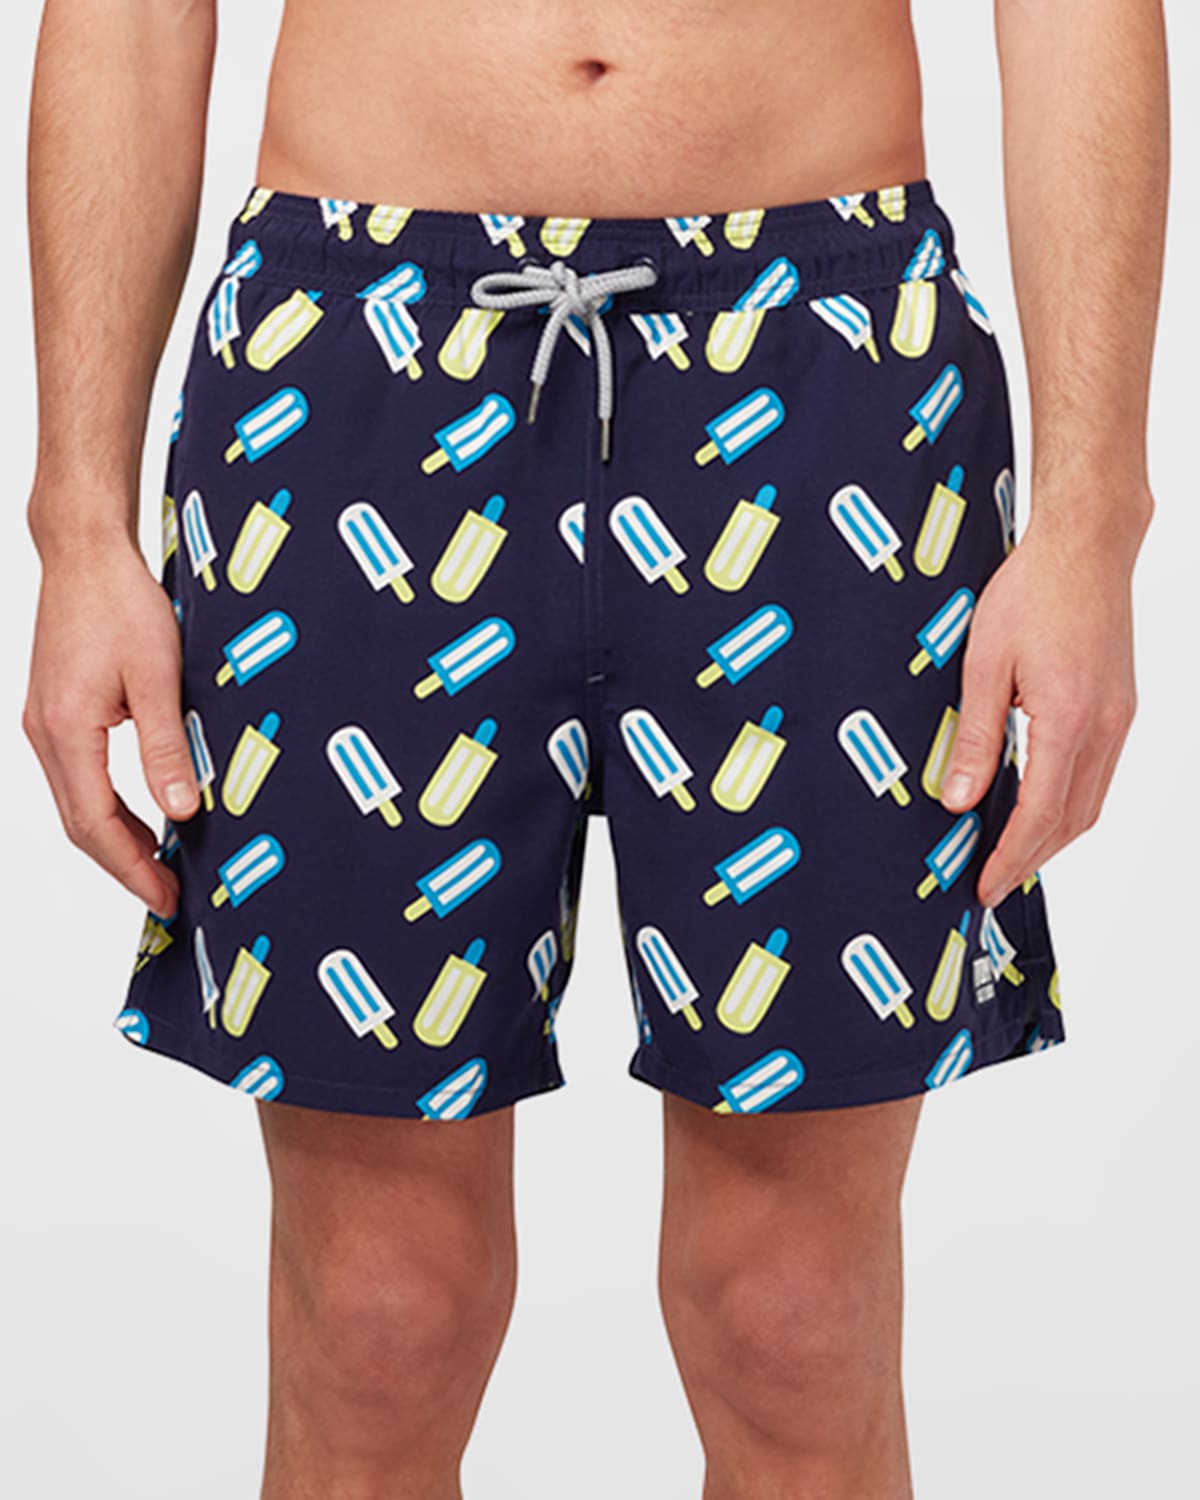 Men's Lollipop-Print Swim Trunks